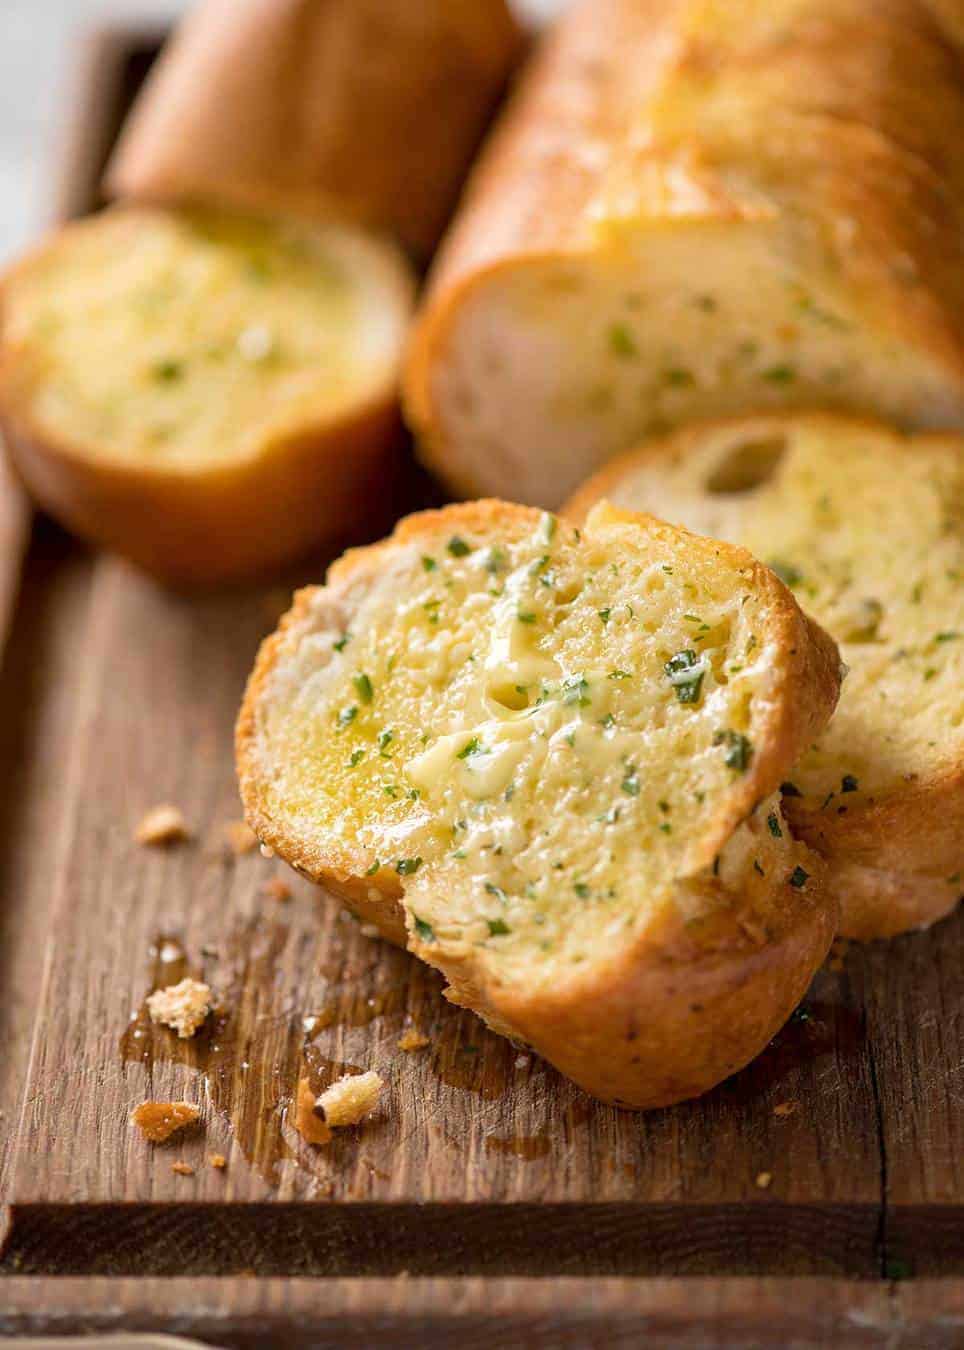 Better-Than-Dominos Garlic Bread from https://www.recipetineats.com/